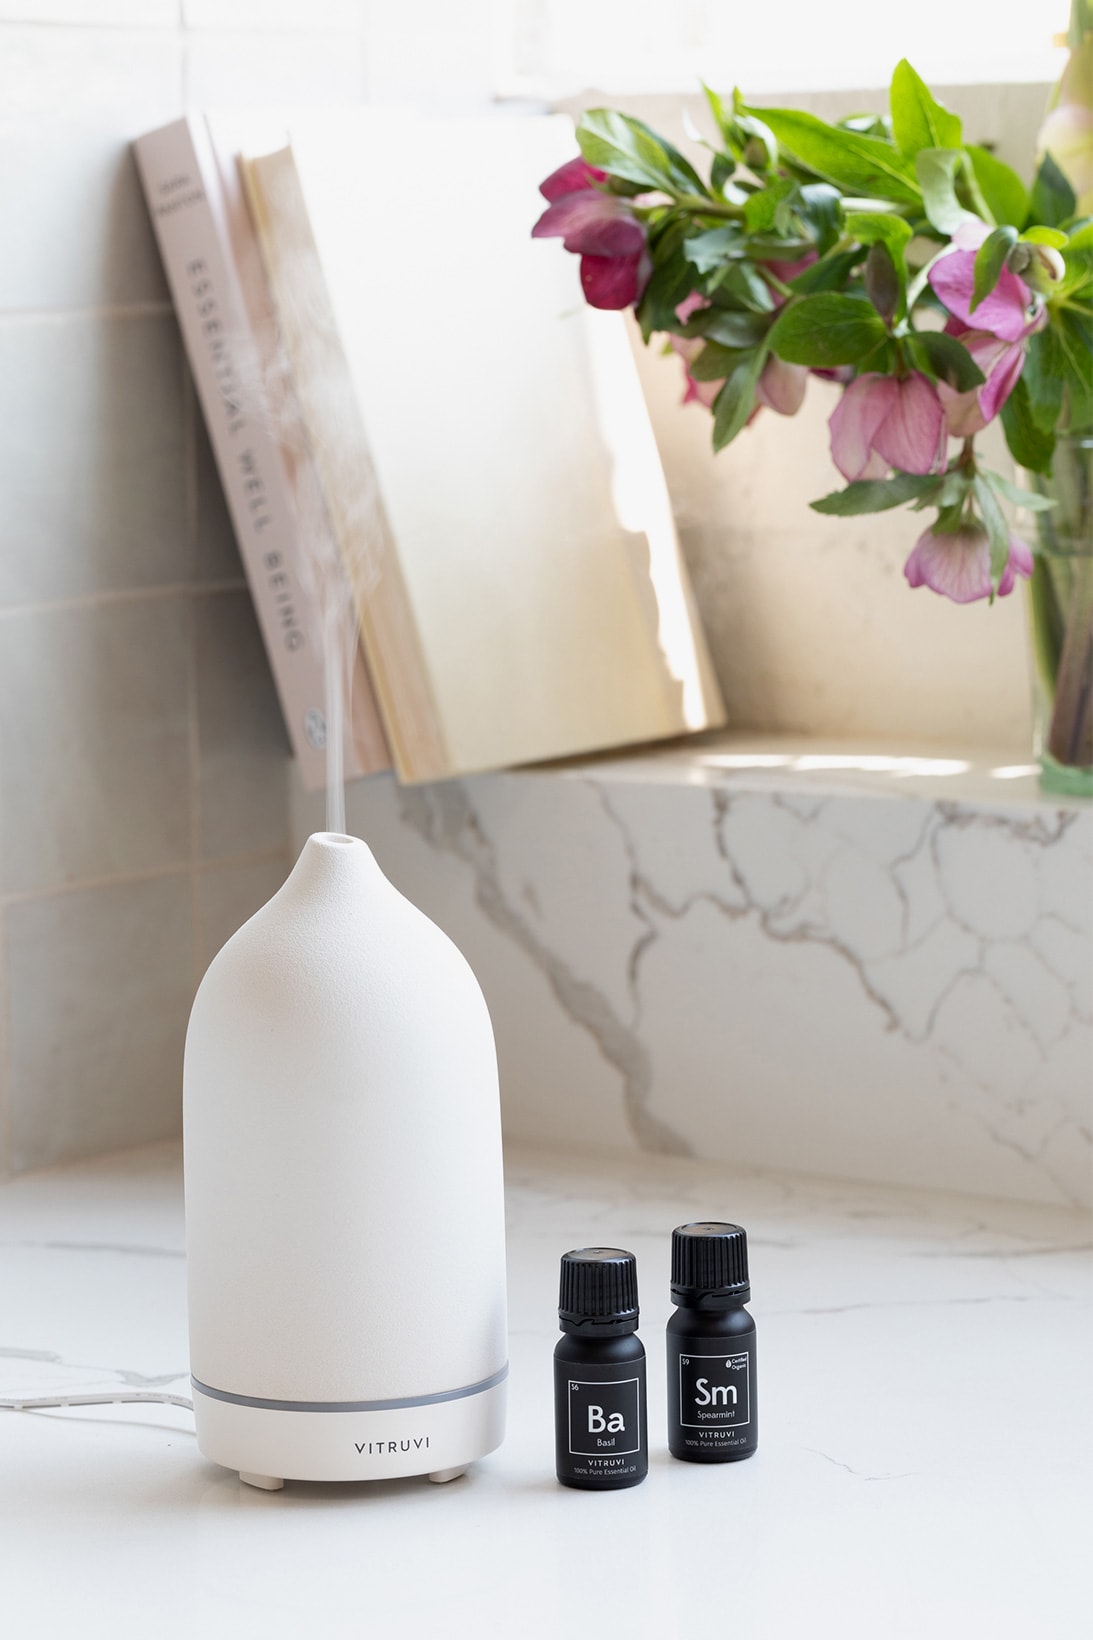 vitruvi diffuser essential oils basil ginger citronella spearmint home refresh kit scent fragrance